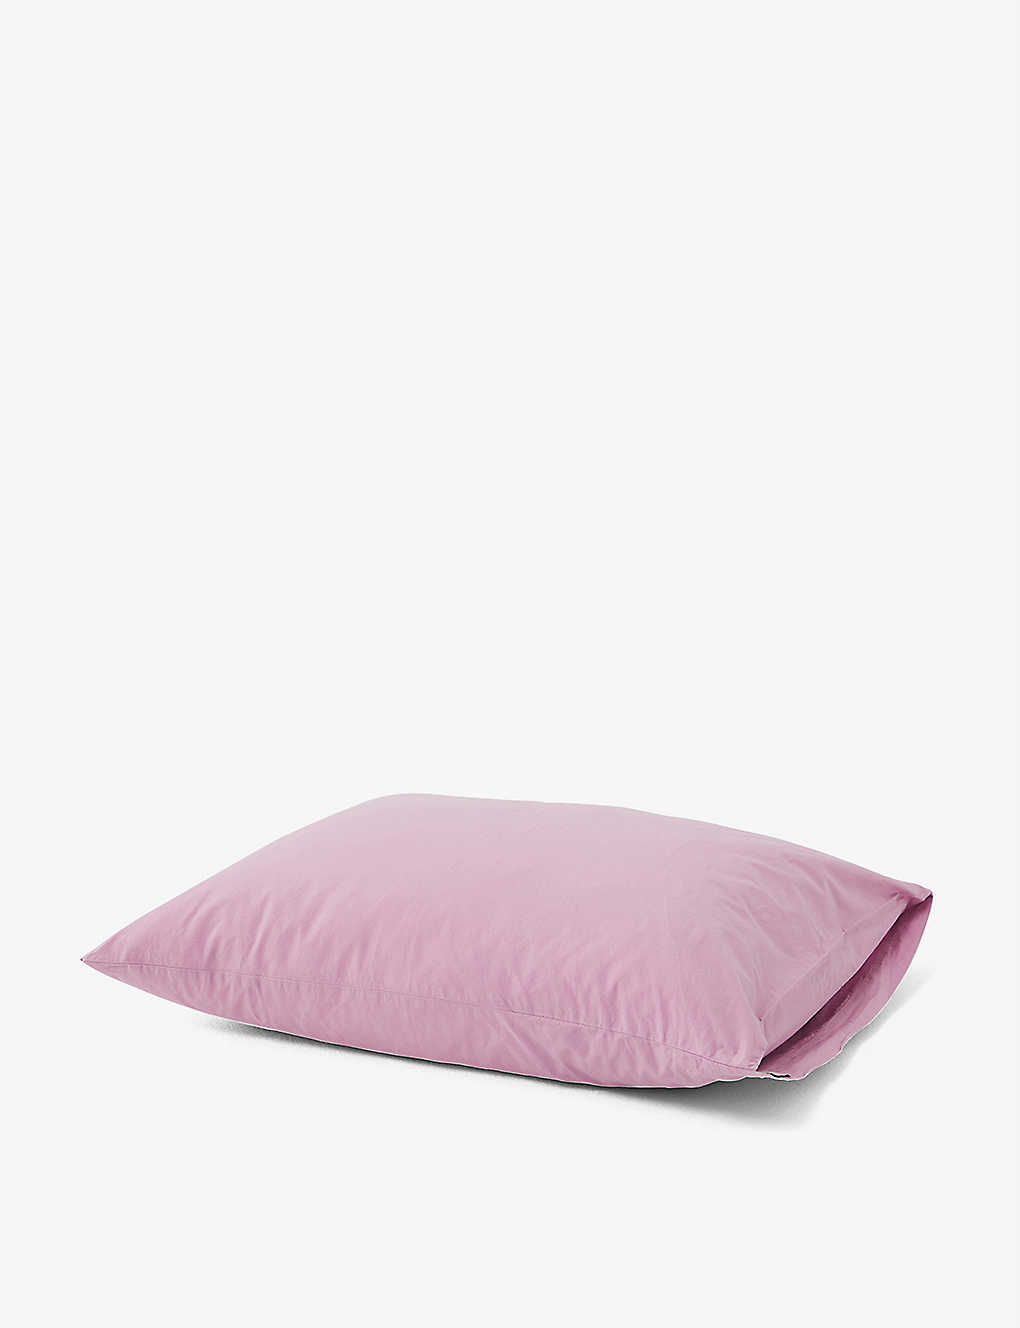 TEKLA コア オーガニックコットン ピローケース 50cm x 70cm Core organic-cotton pillowcase PINK